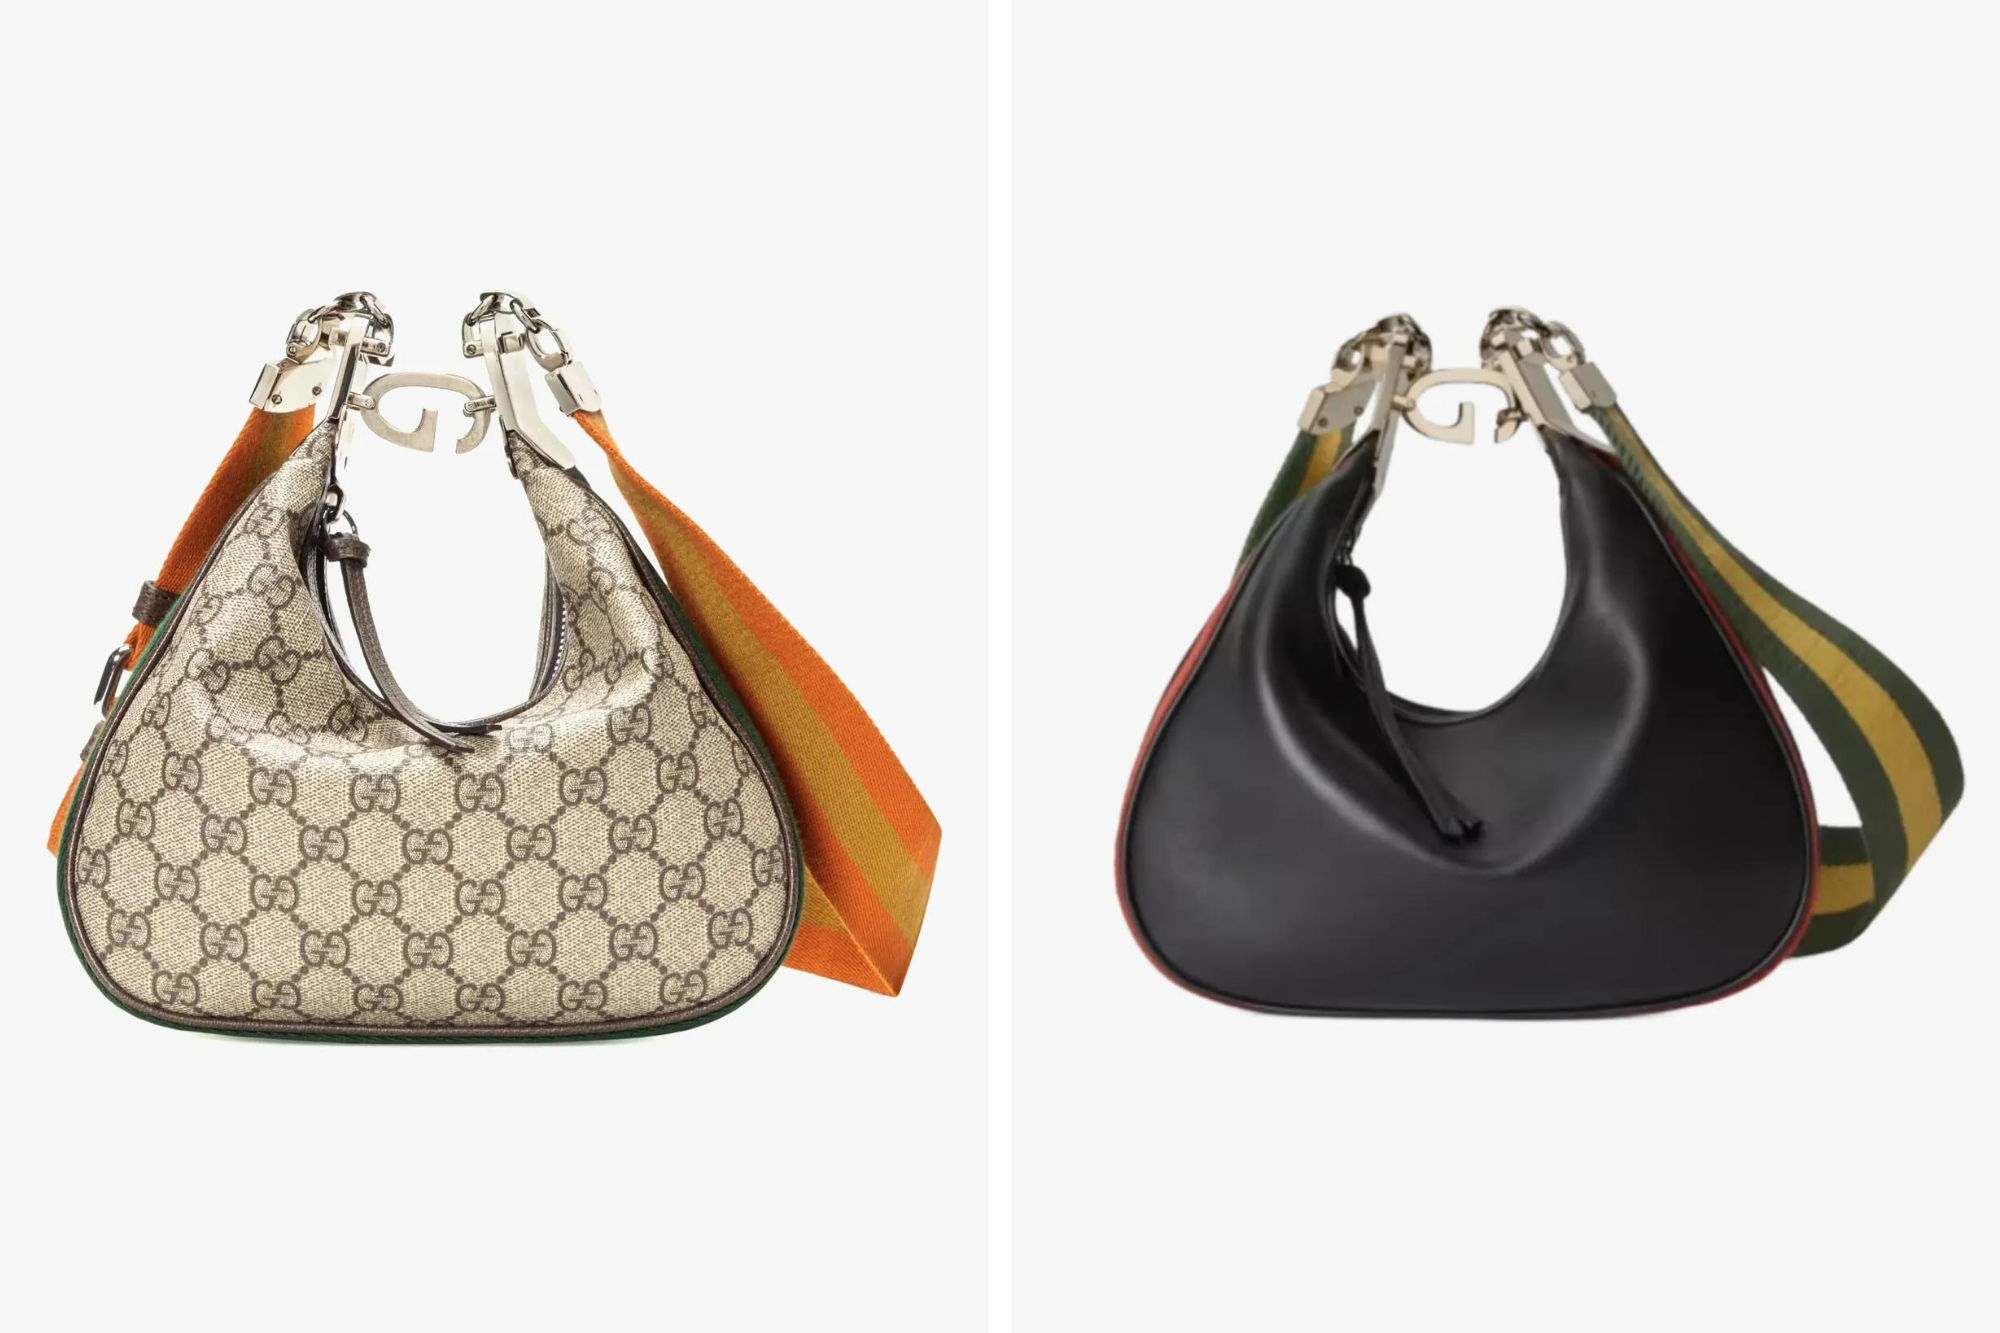 Rebag: Hermès, Chanel And Louis Vuitton Hold Highest Resale Value